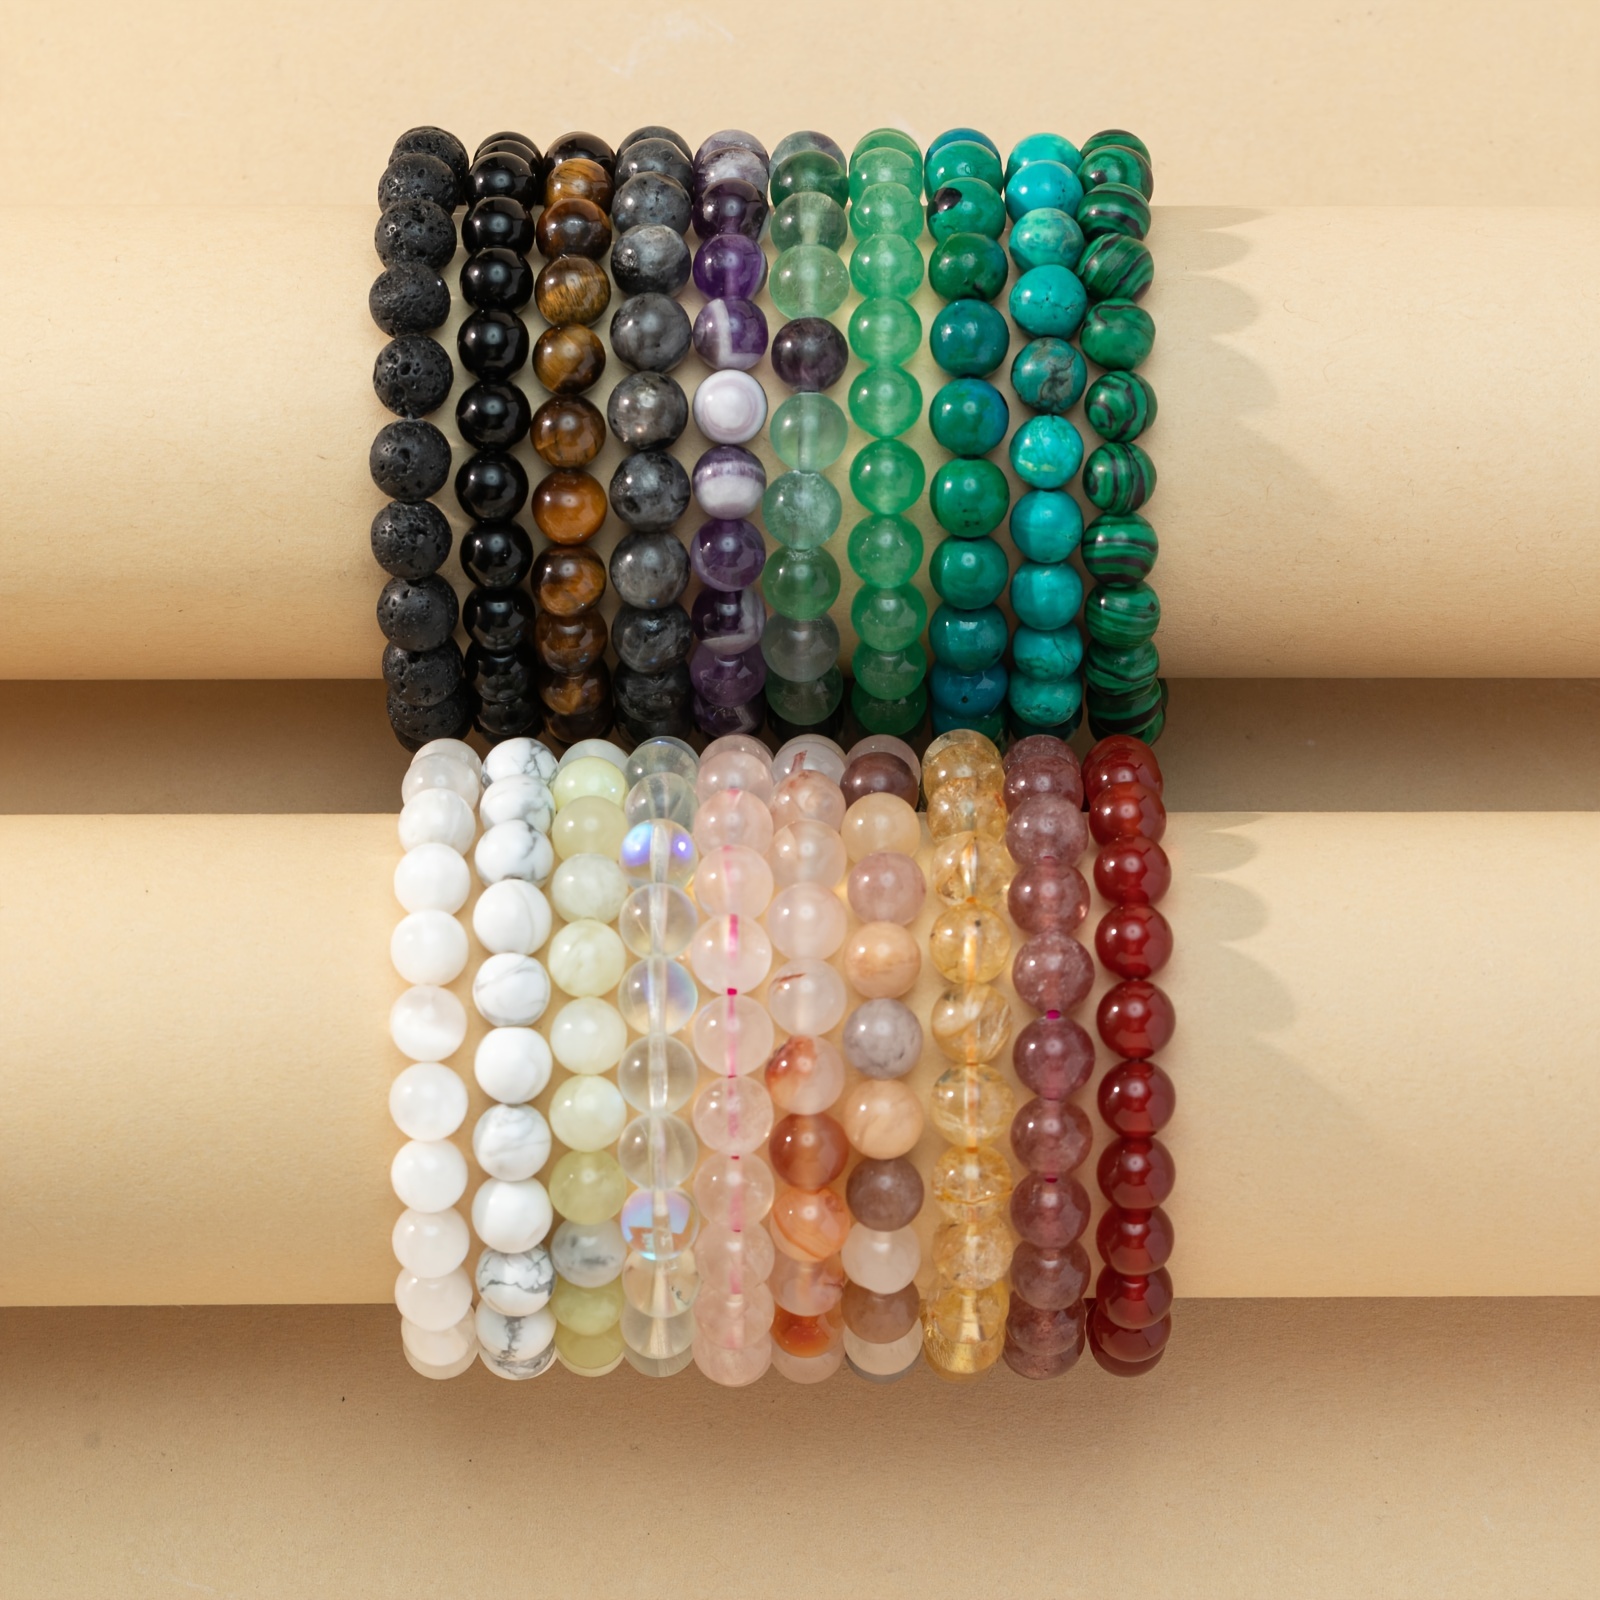 7 Chakra Healing Crystal Elastic Bracelet - 6mm Beads